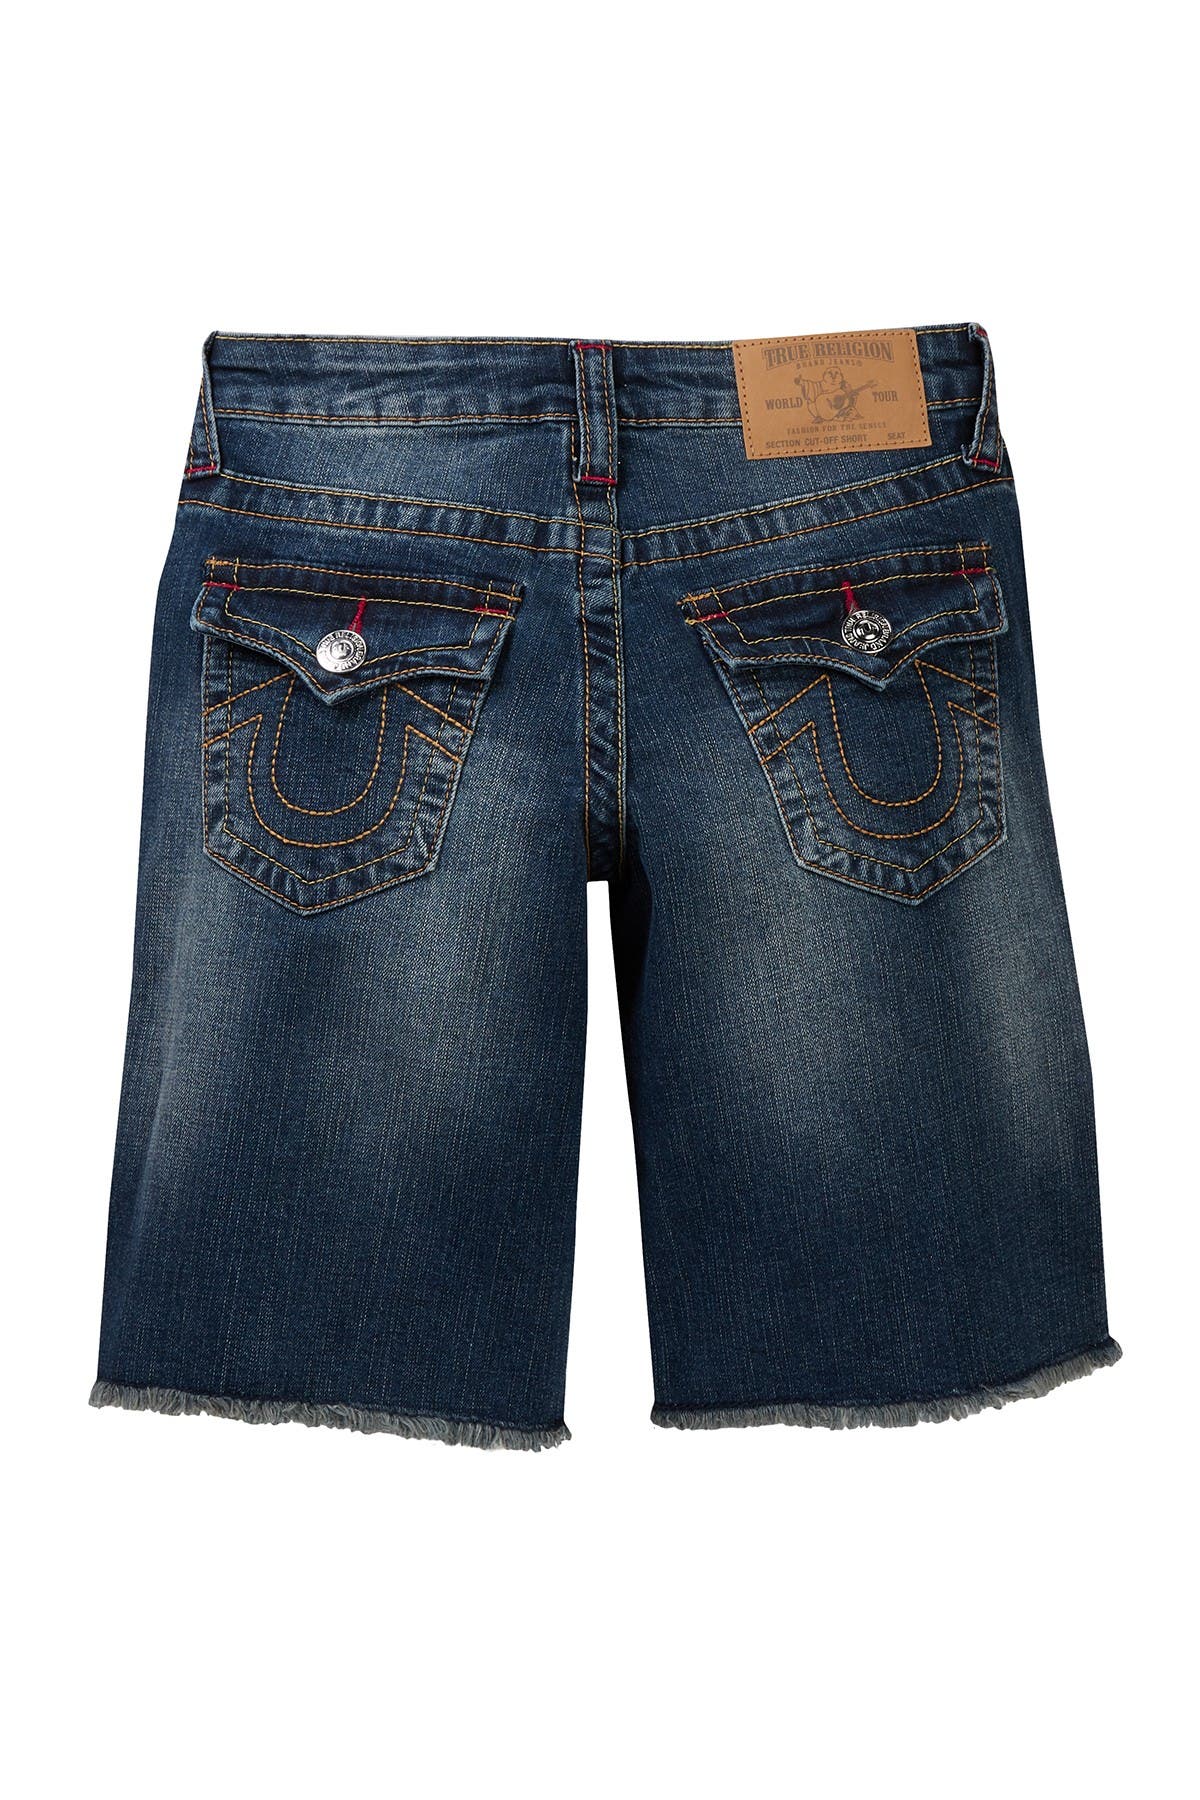 true religion overall shorts